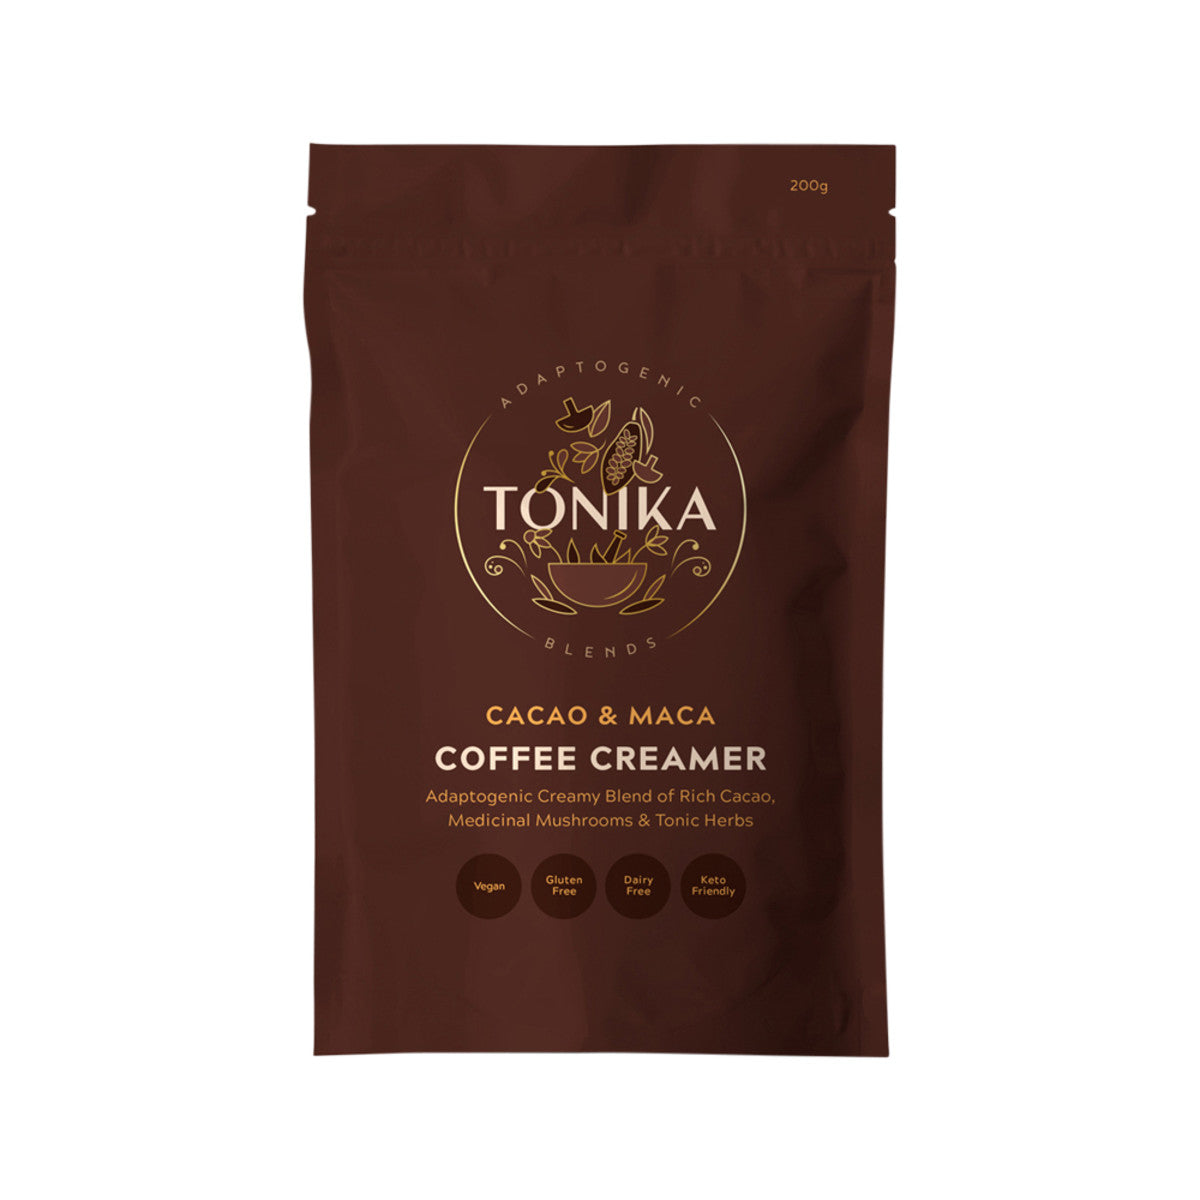 Tonika Coffee Creamer Cacao and Maca 200g